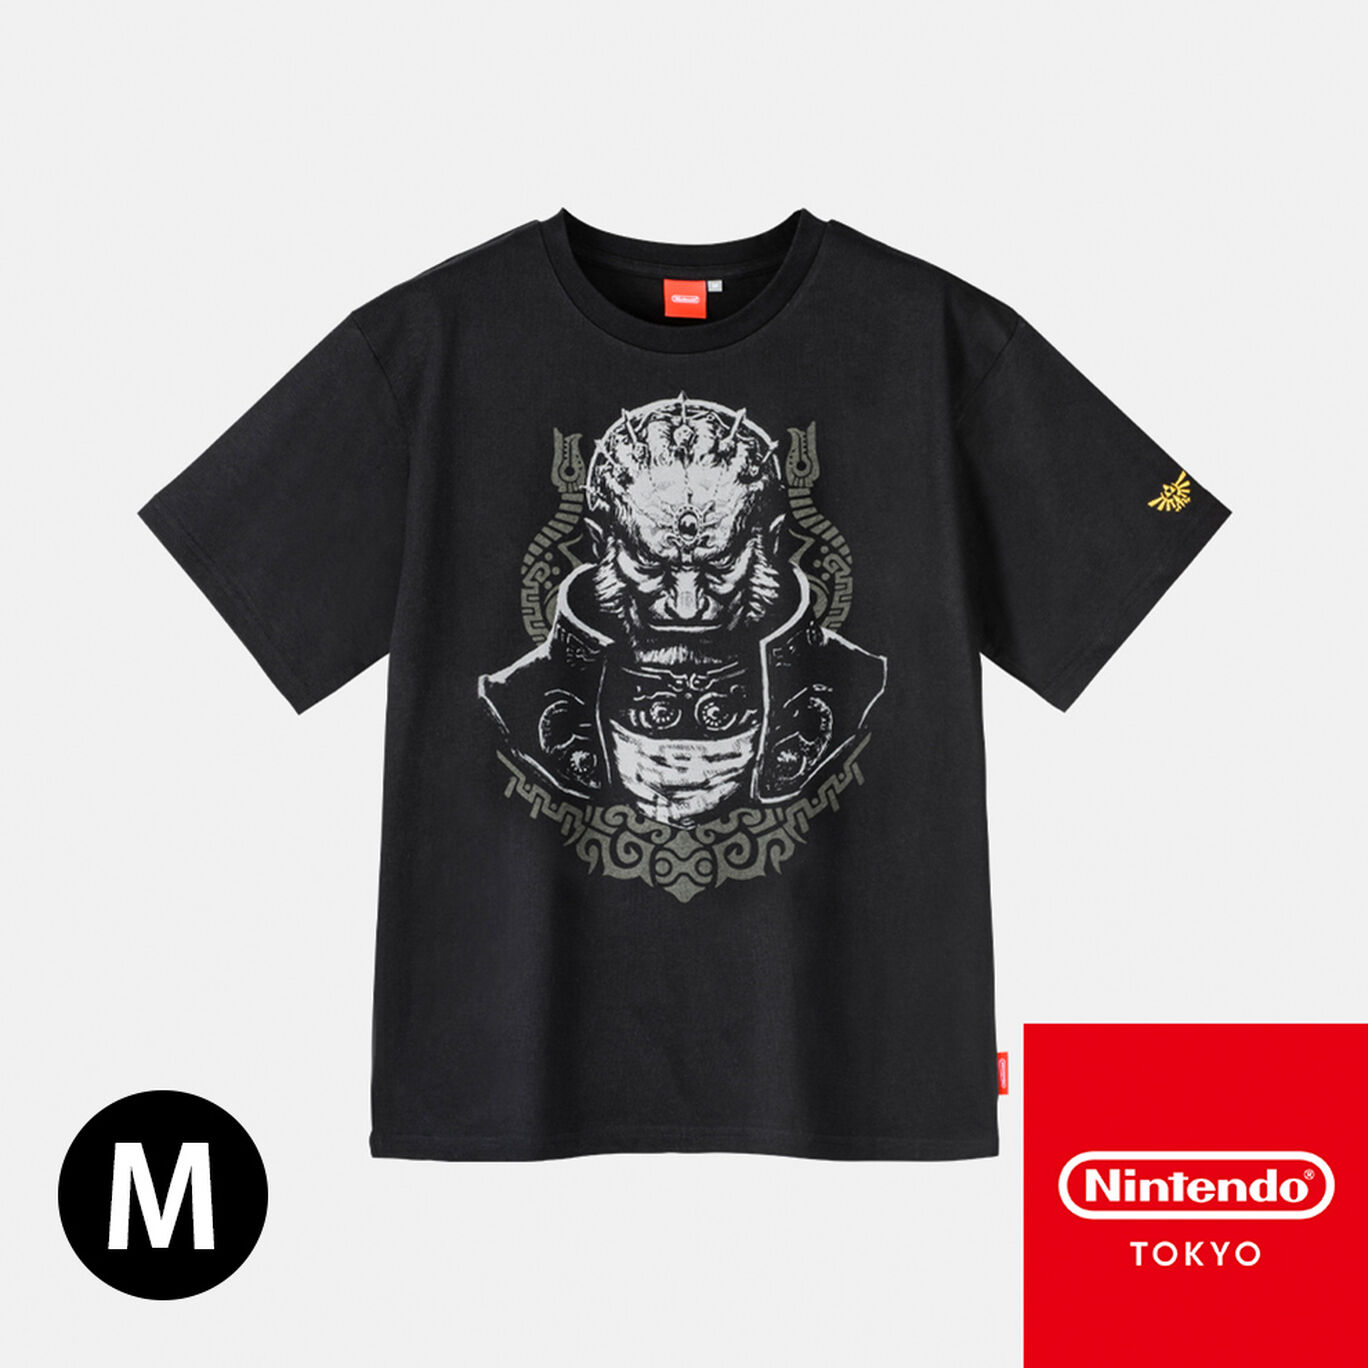 Tシャツ トライフォース ガノンドロフ M ゼルダの伝説【Nintendo TOKYO取り扱い商品】